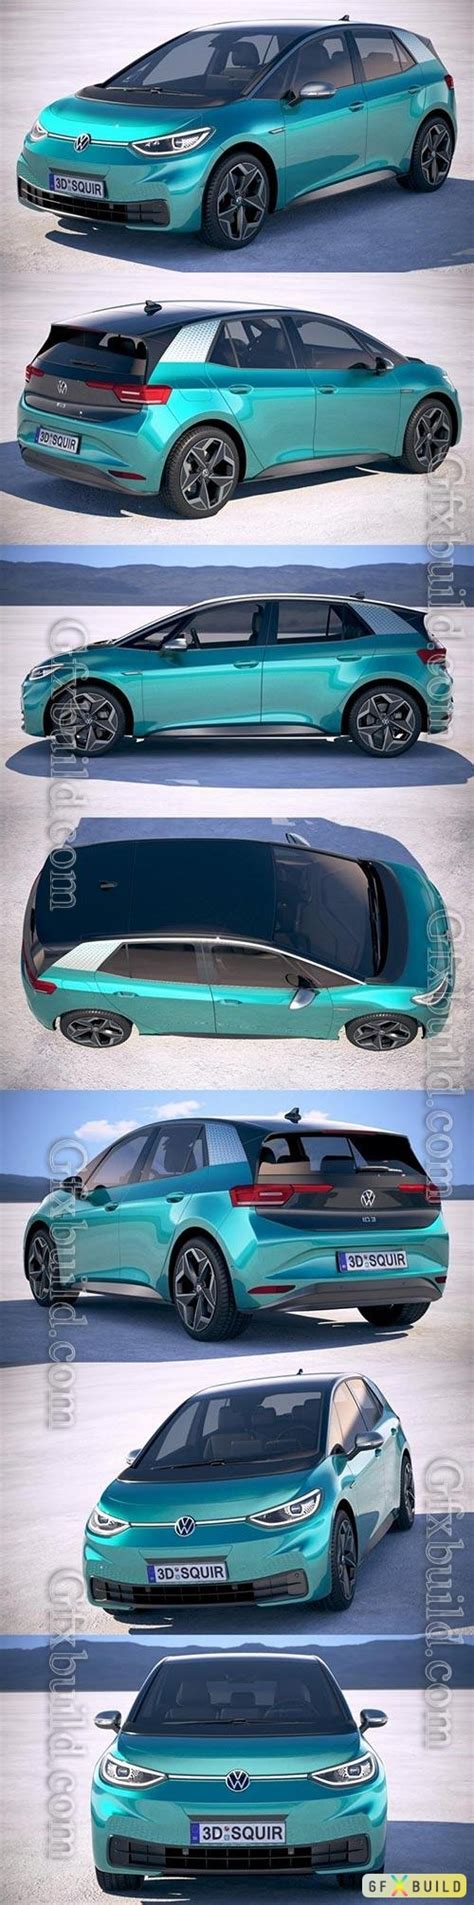 3d Models Volkswagen Id3 First Edition 2020 3d Model Gfxbuild